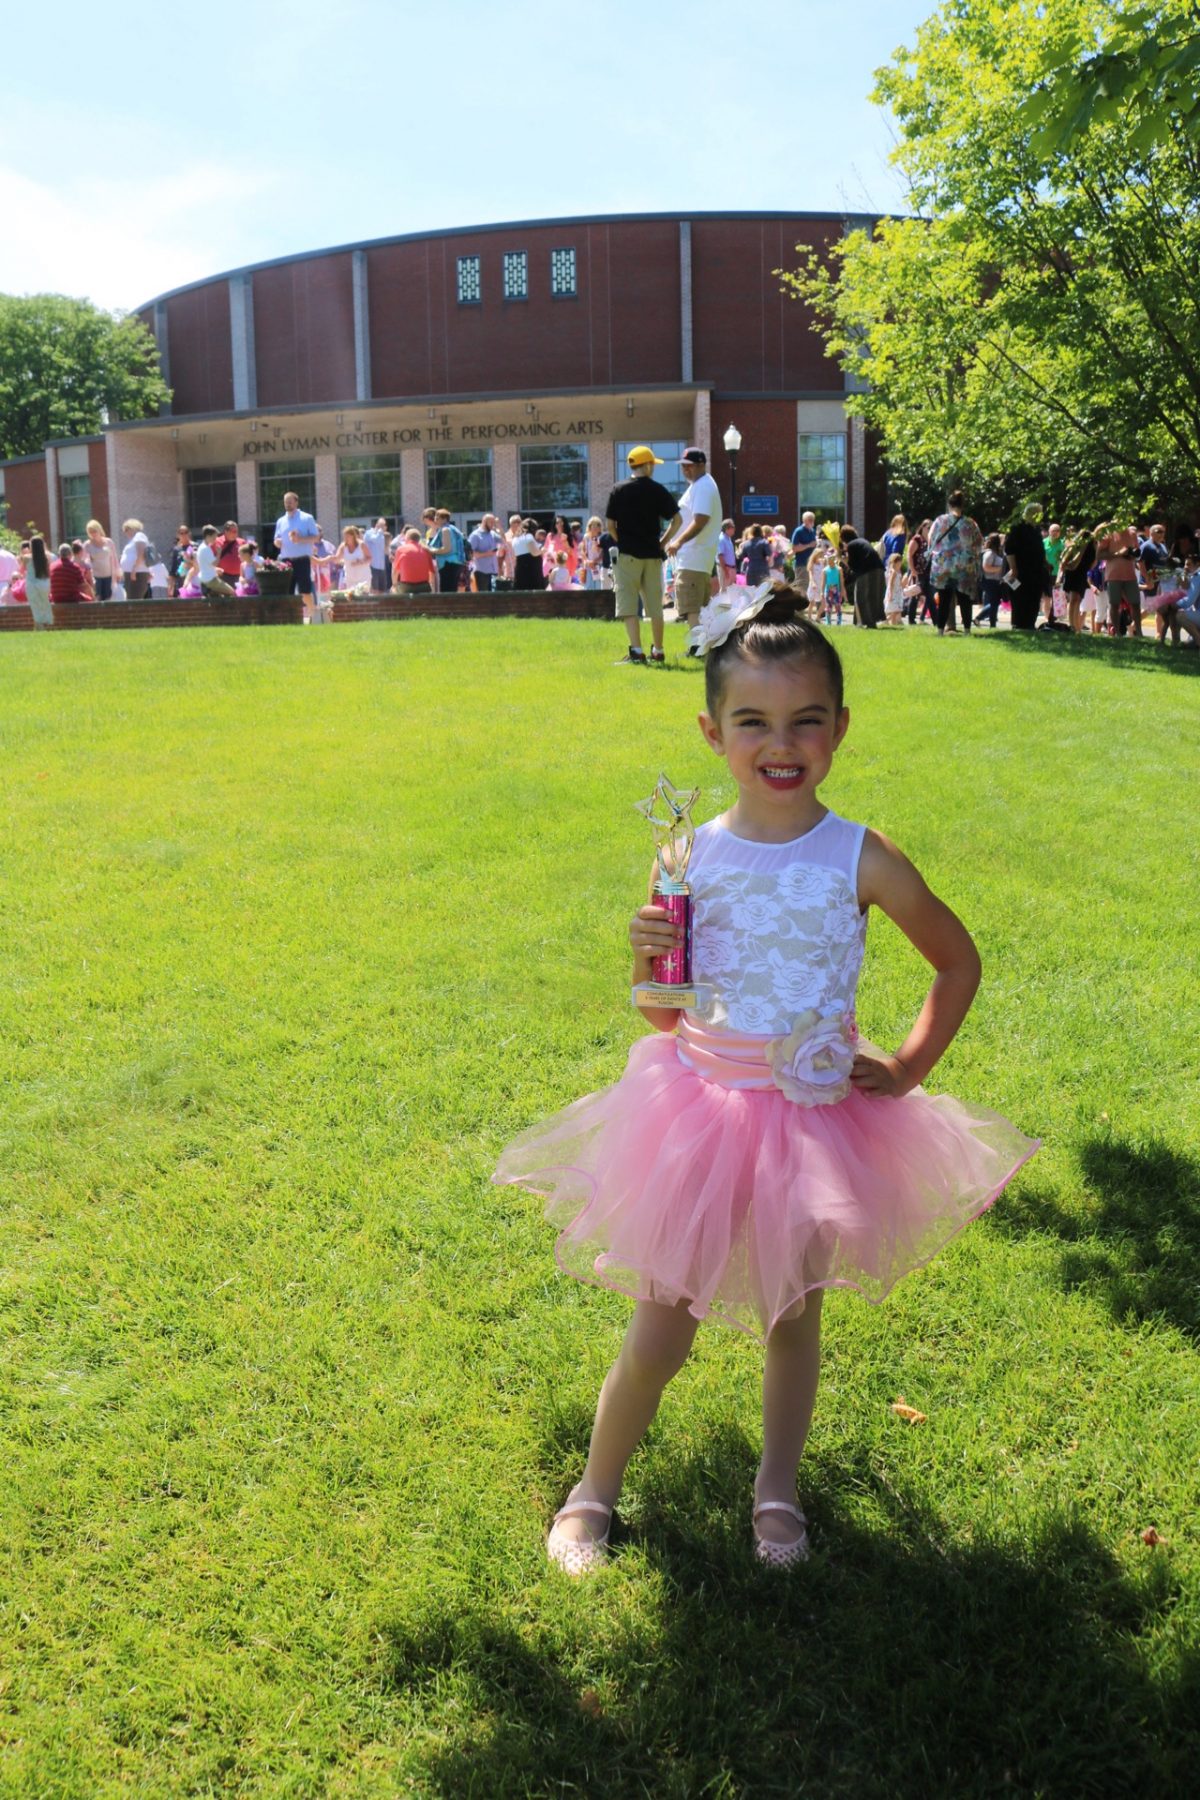 Ballerina after her dance recital holding trophy